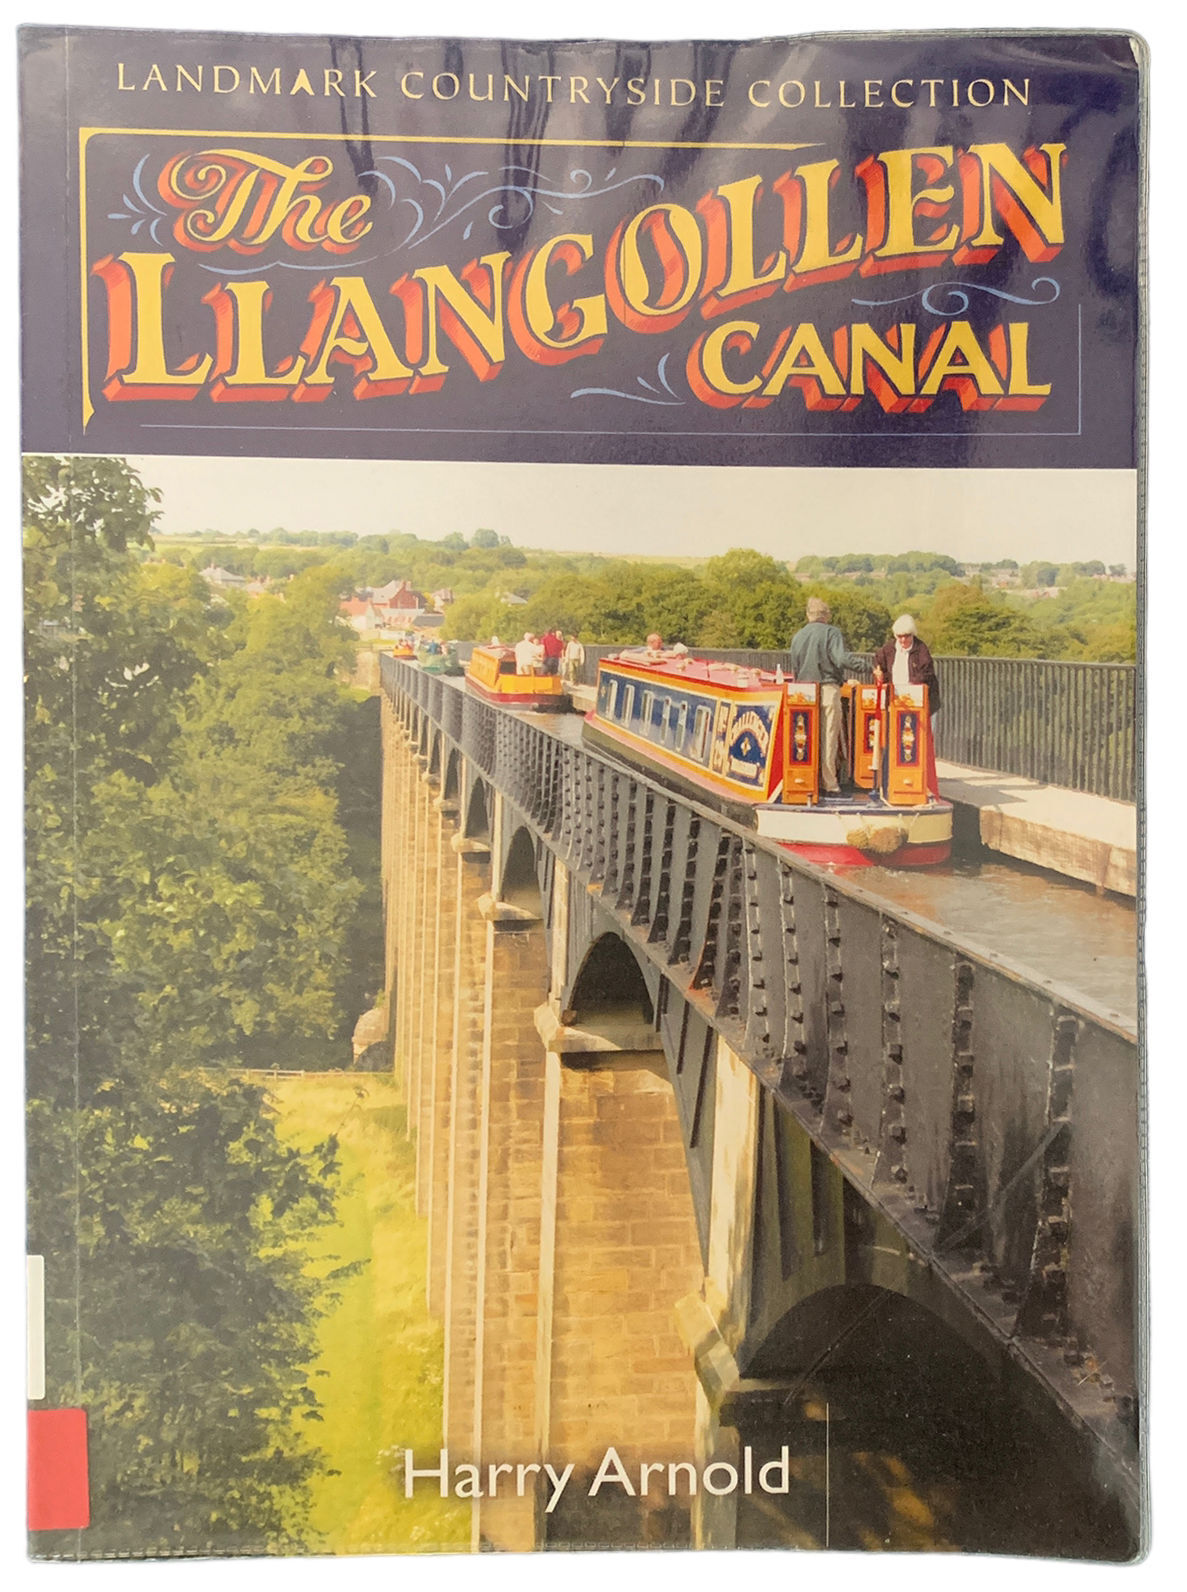 Llangollen Canal Books Select Copy from drop down Menu